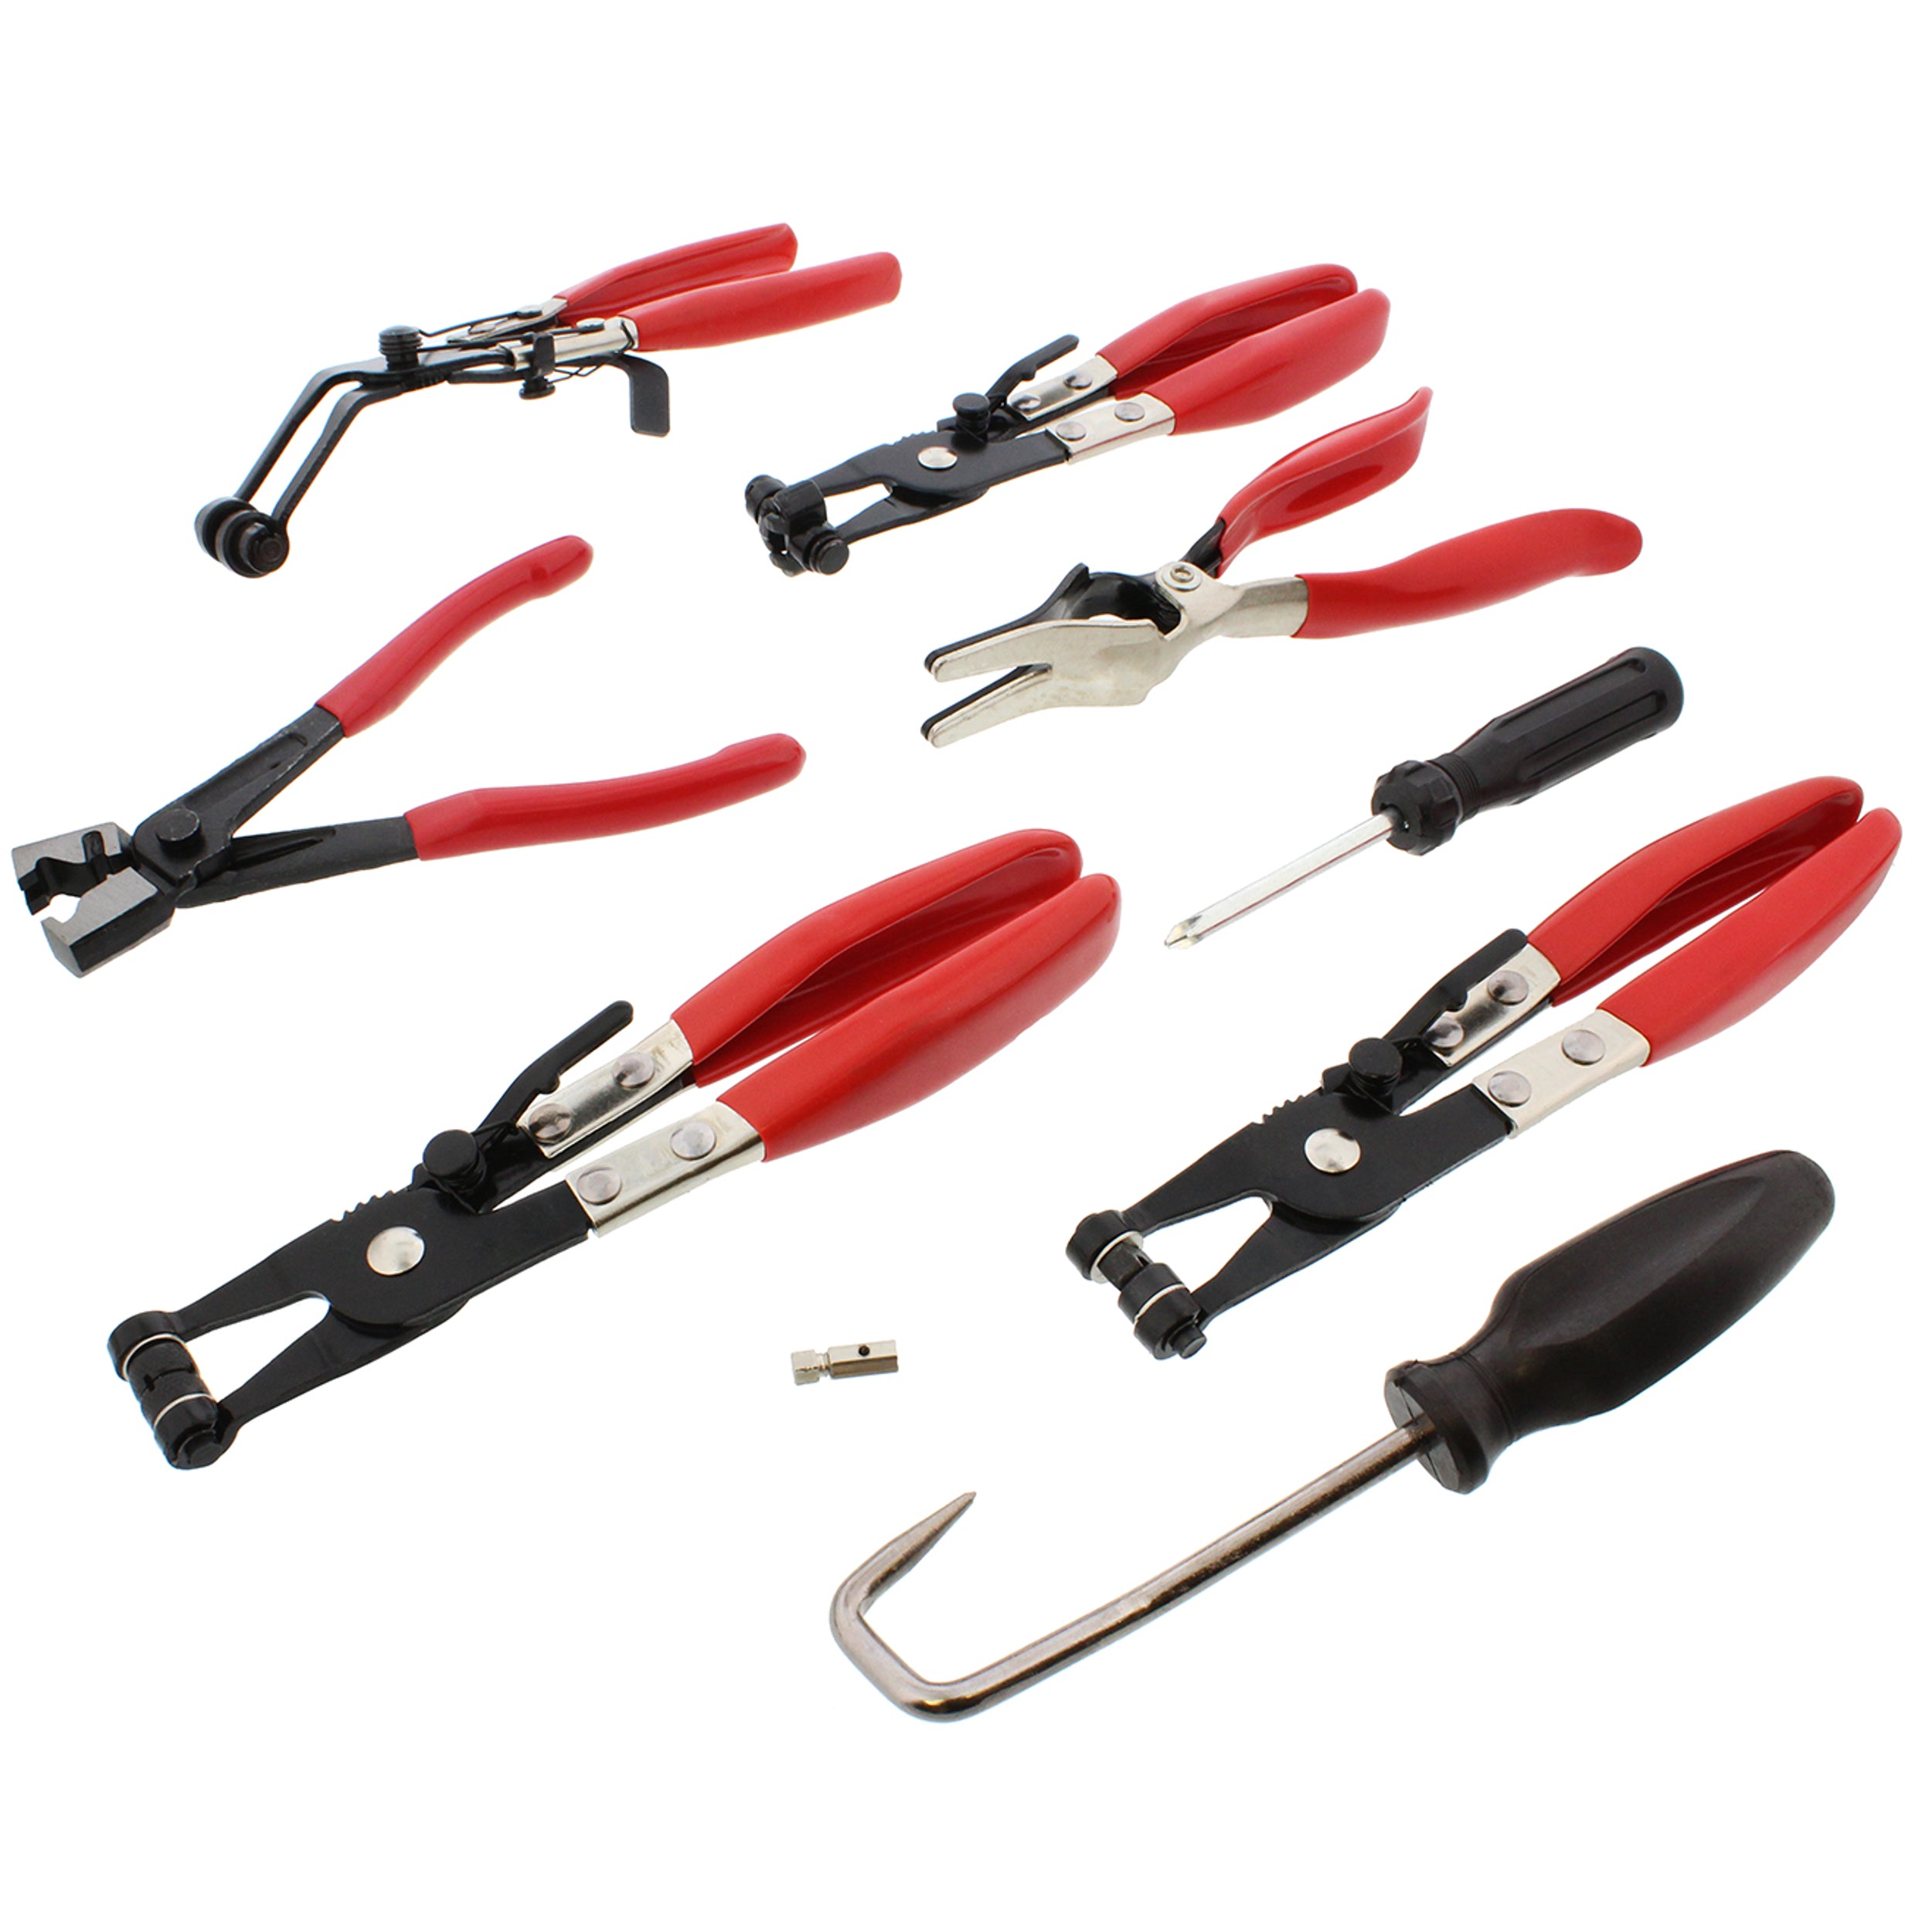 Hose Clamp Pliers 9 pc Remover Tool Kit – Automotive Hose Removal Set